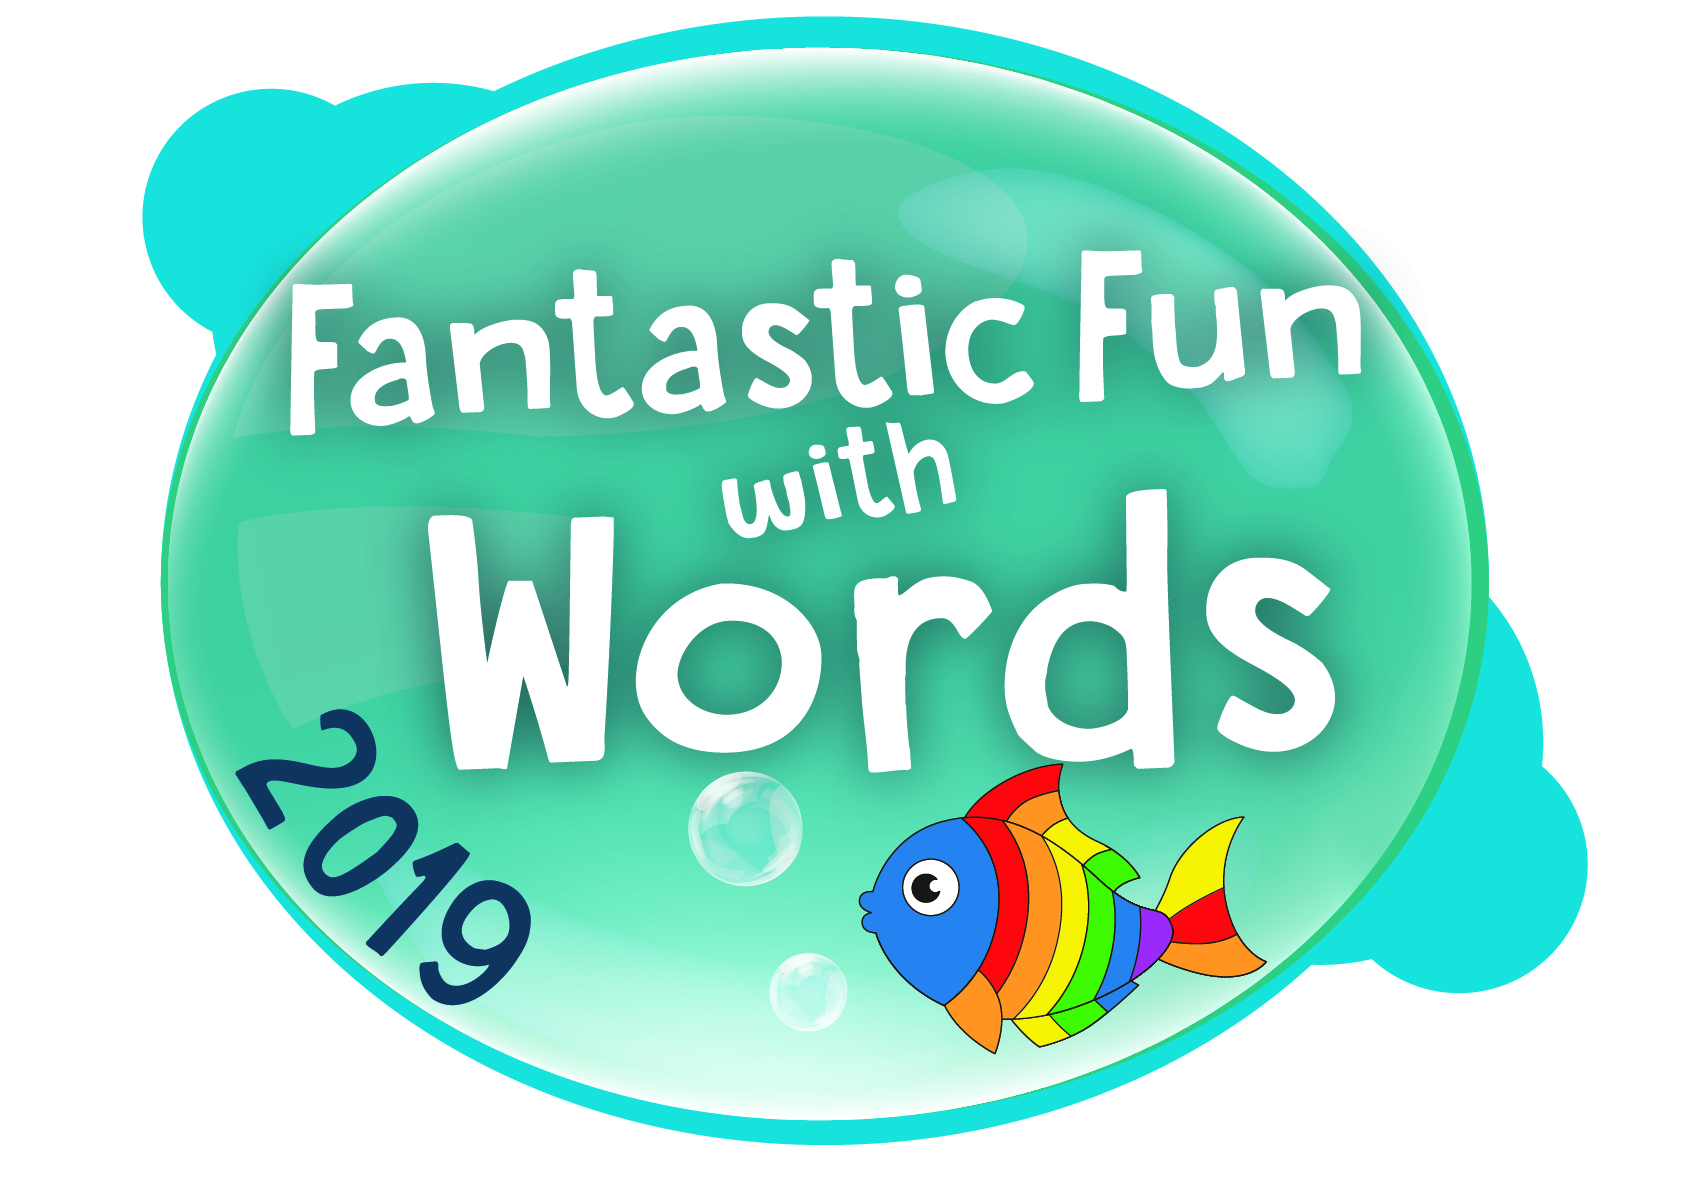 Fantastic fun with words 2019 logo